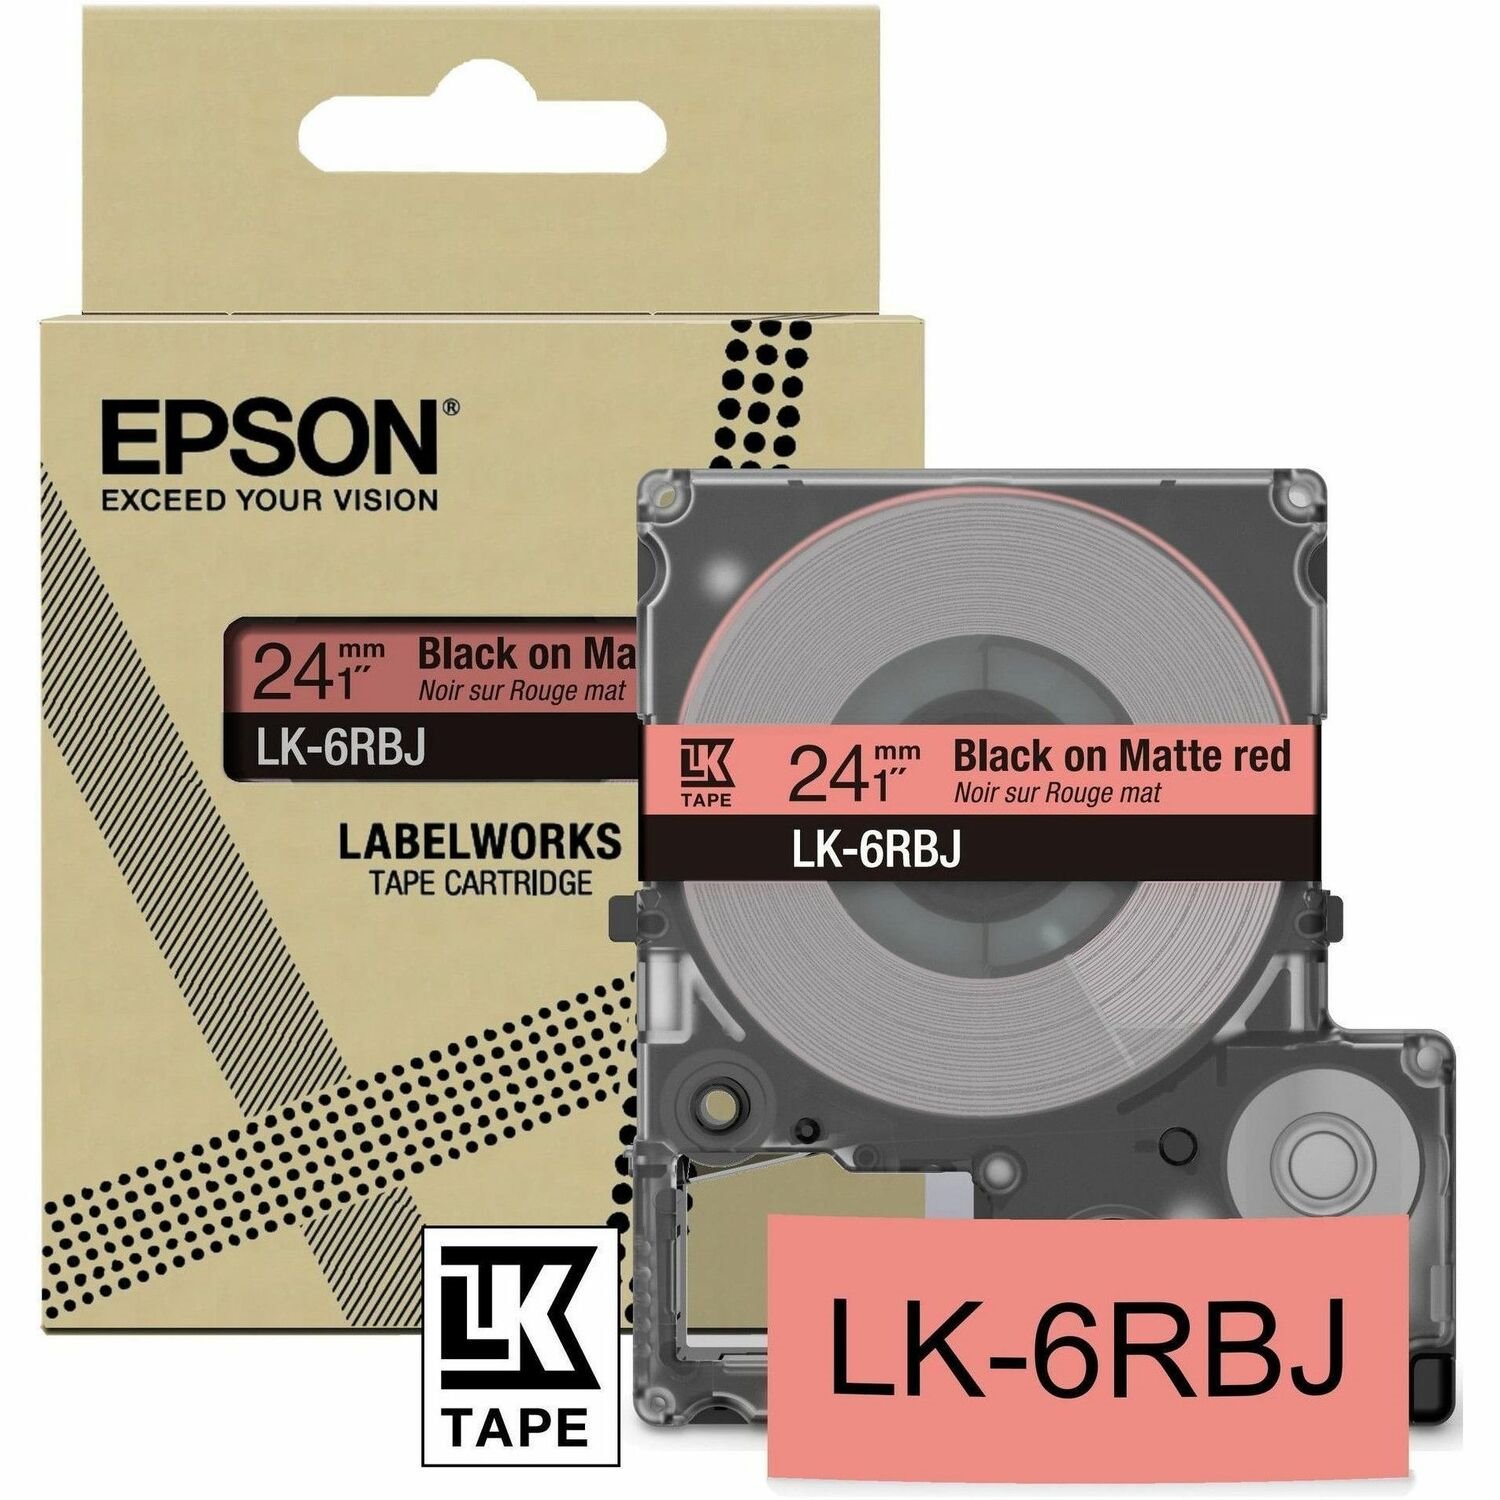 Epson LK-6RBJ Label Tape